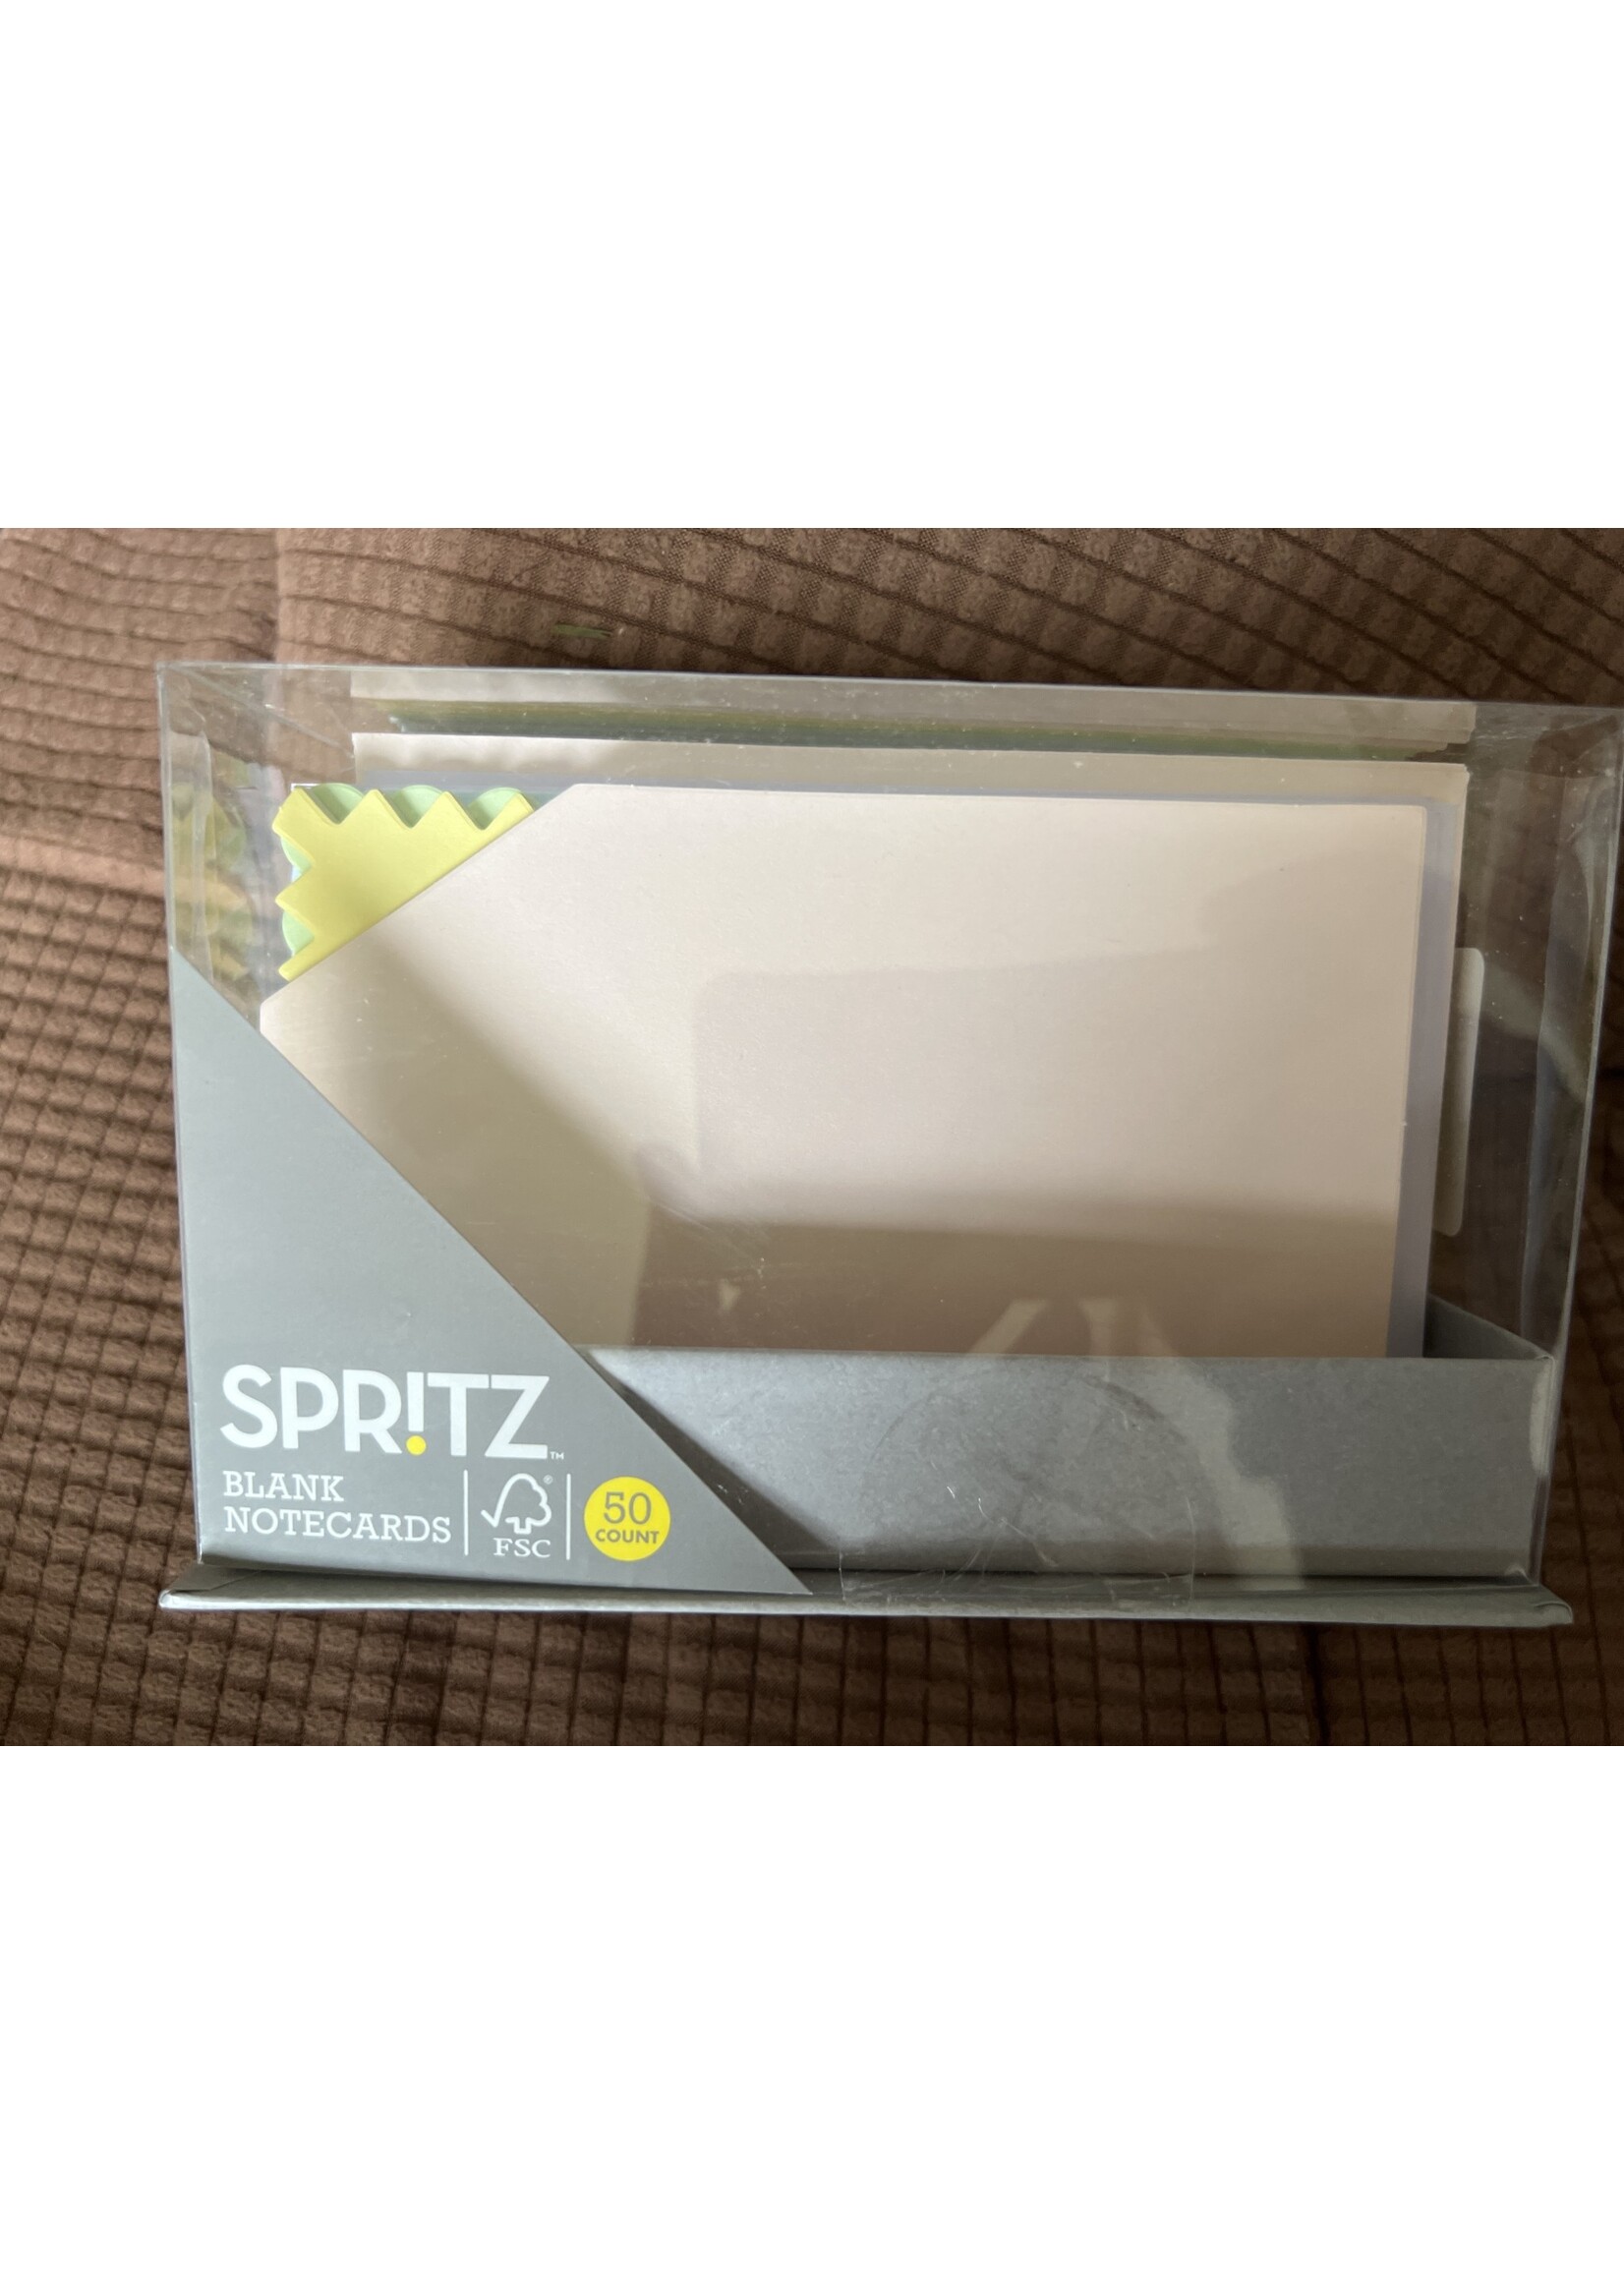 Spritz Blank Note Cards - D3 Surplus Outlet